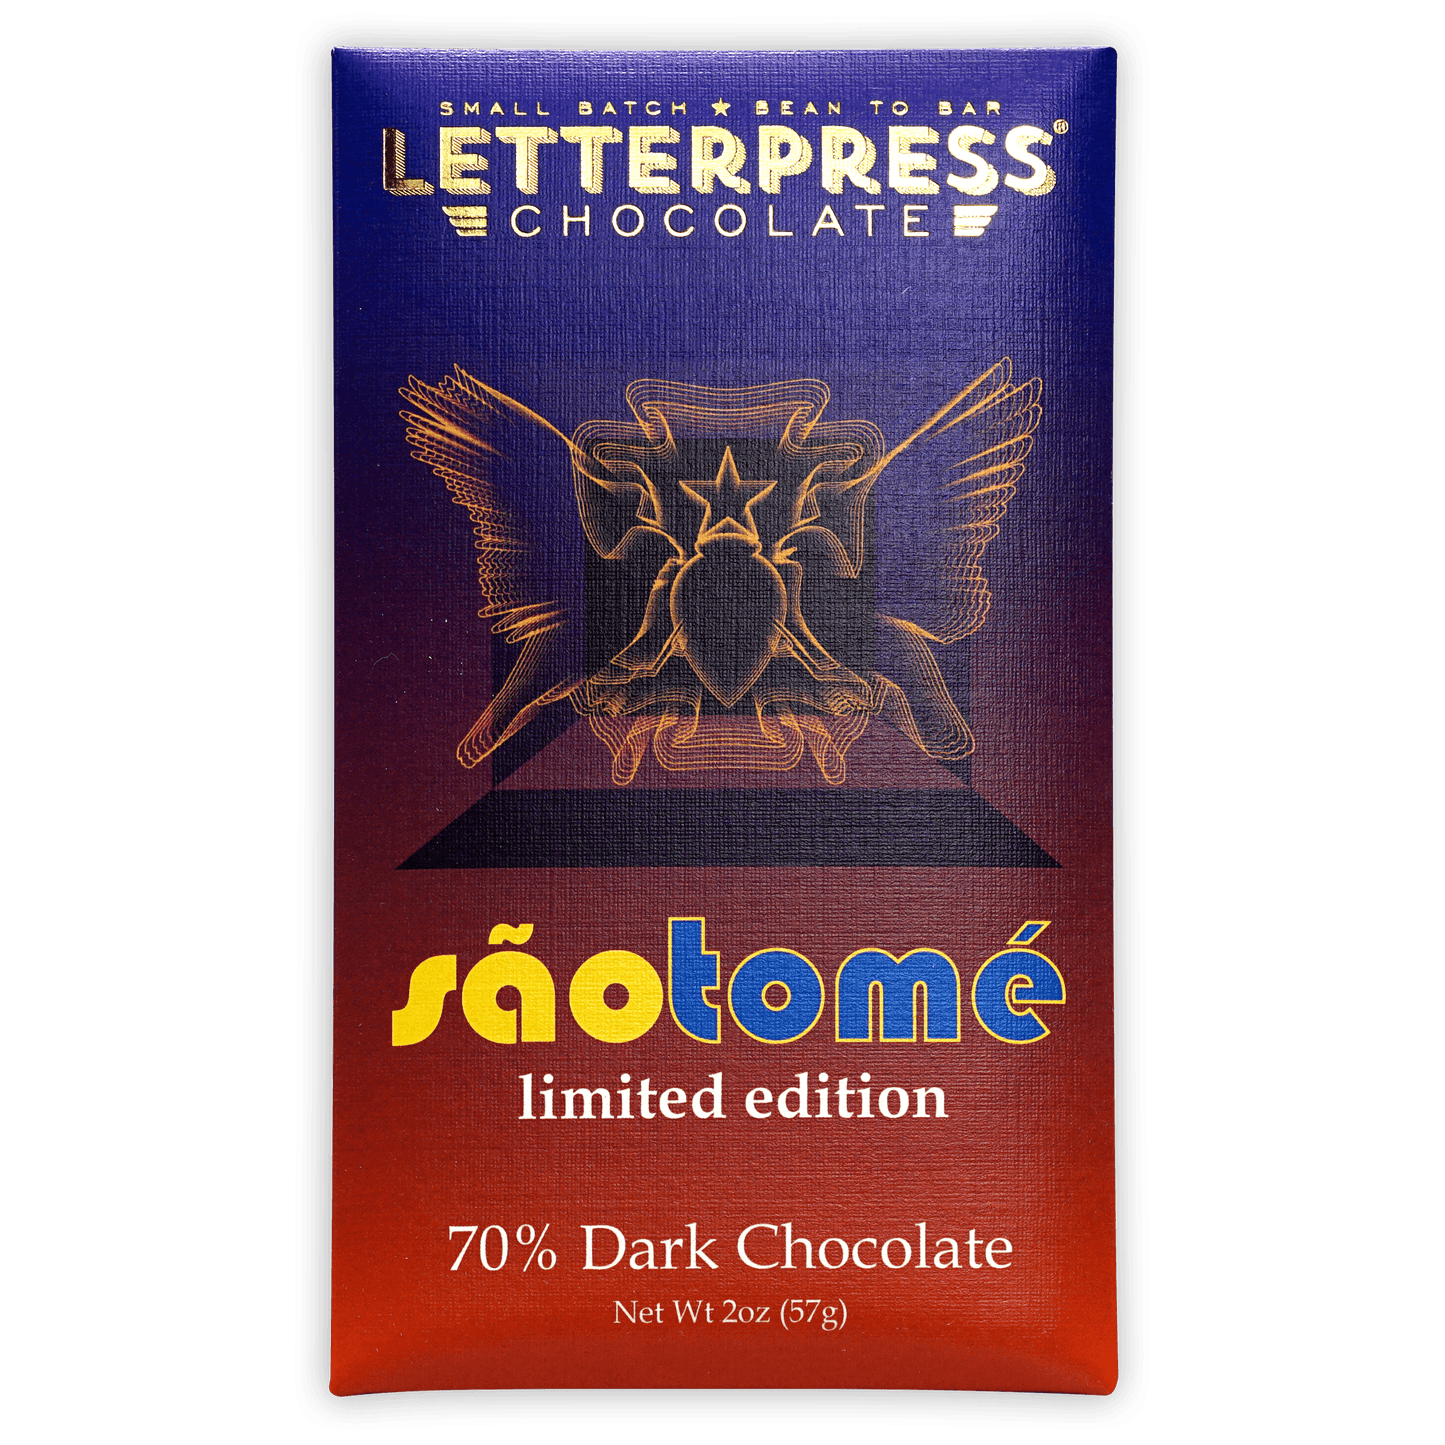 LetterPress Satocao Sao Tome 70% (Limited Edition)